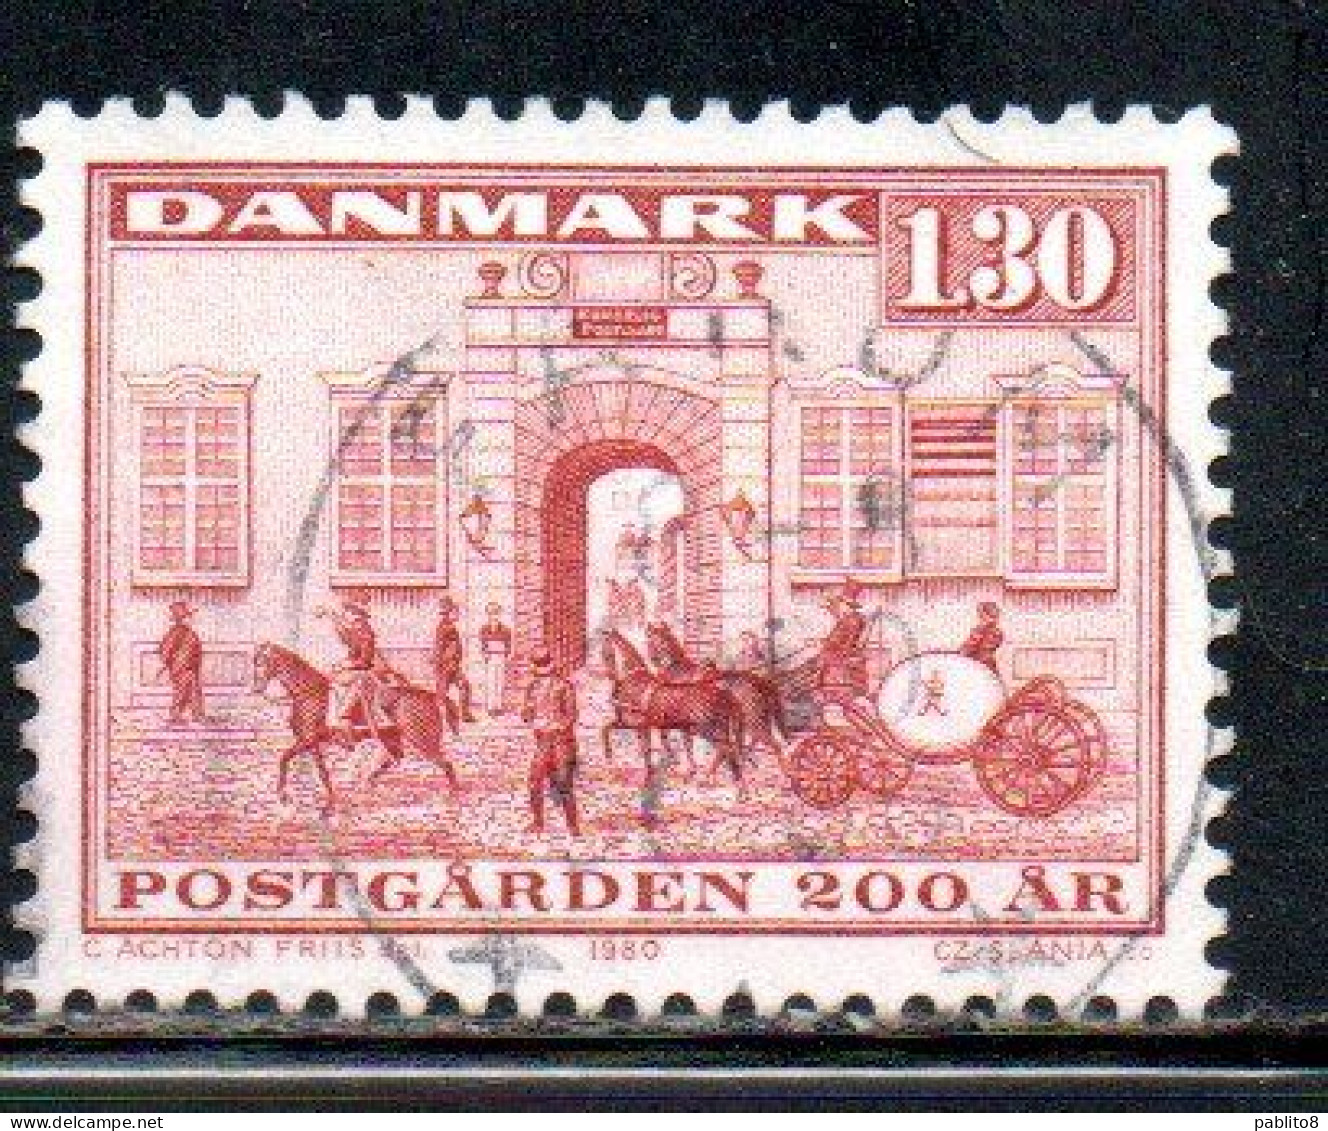 DANEMARK DANMARK DENMARK DANIMARCA 1979 NATIONAL POSTAL SERVICE ROYAL MAIL GUARDS' COPENHAGEN 130o USED USATO OBLITERE' - Oblitérés